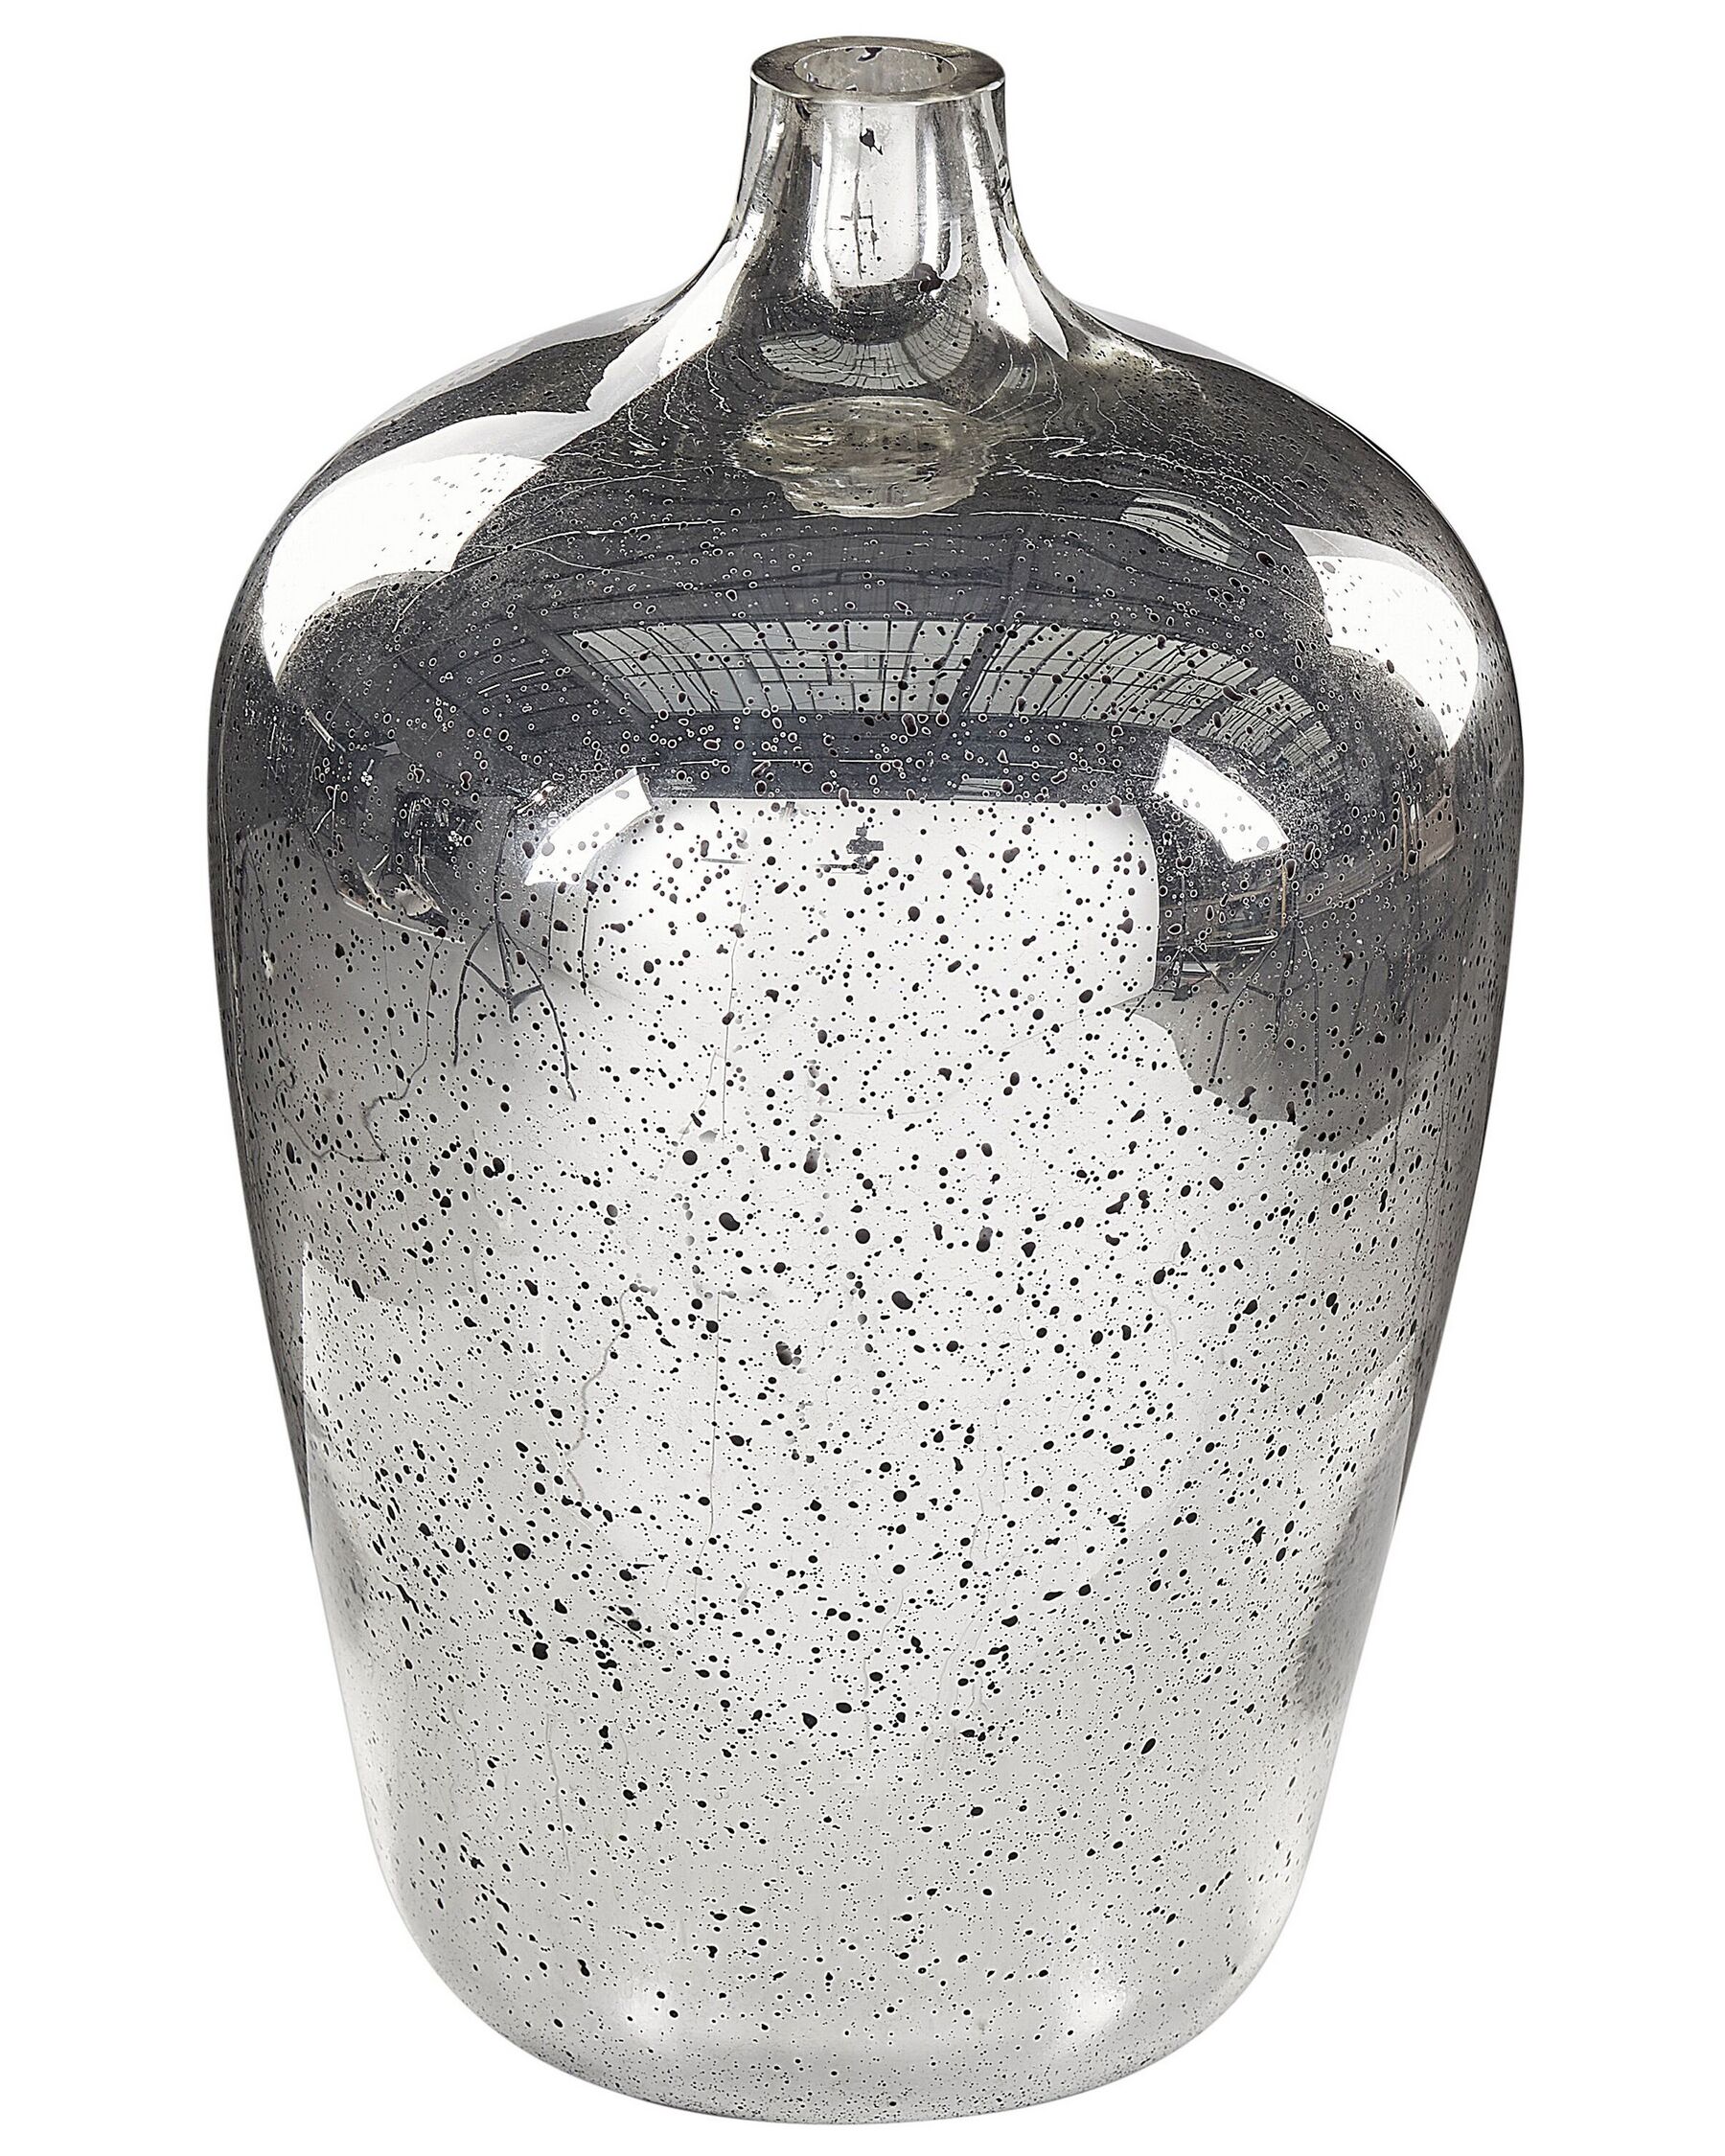 Blomvas glas 40 cm silver KACHORI_830399